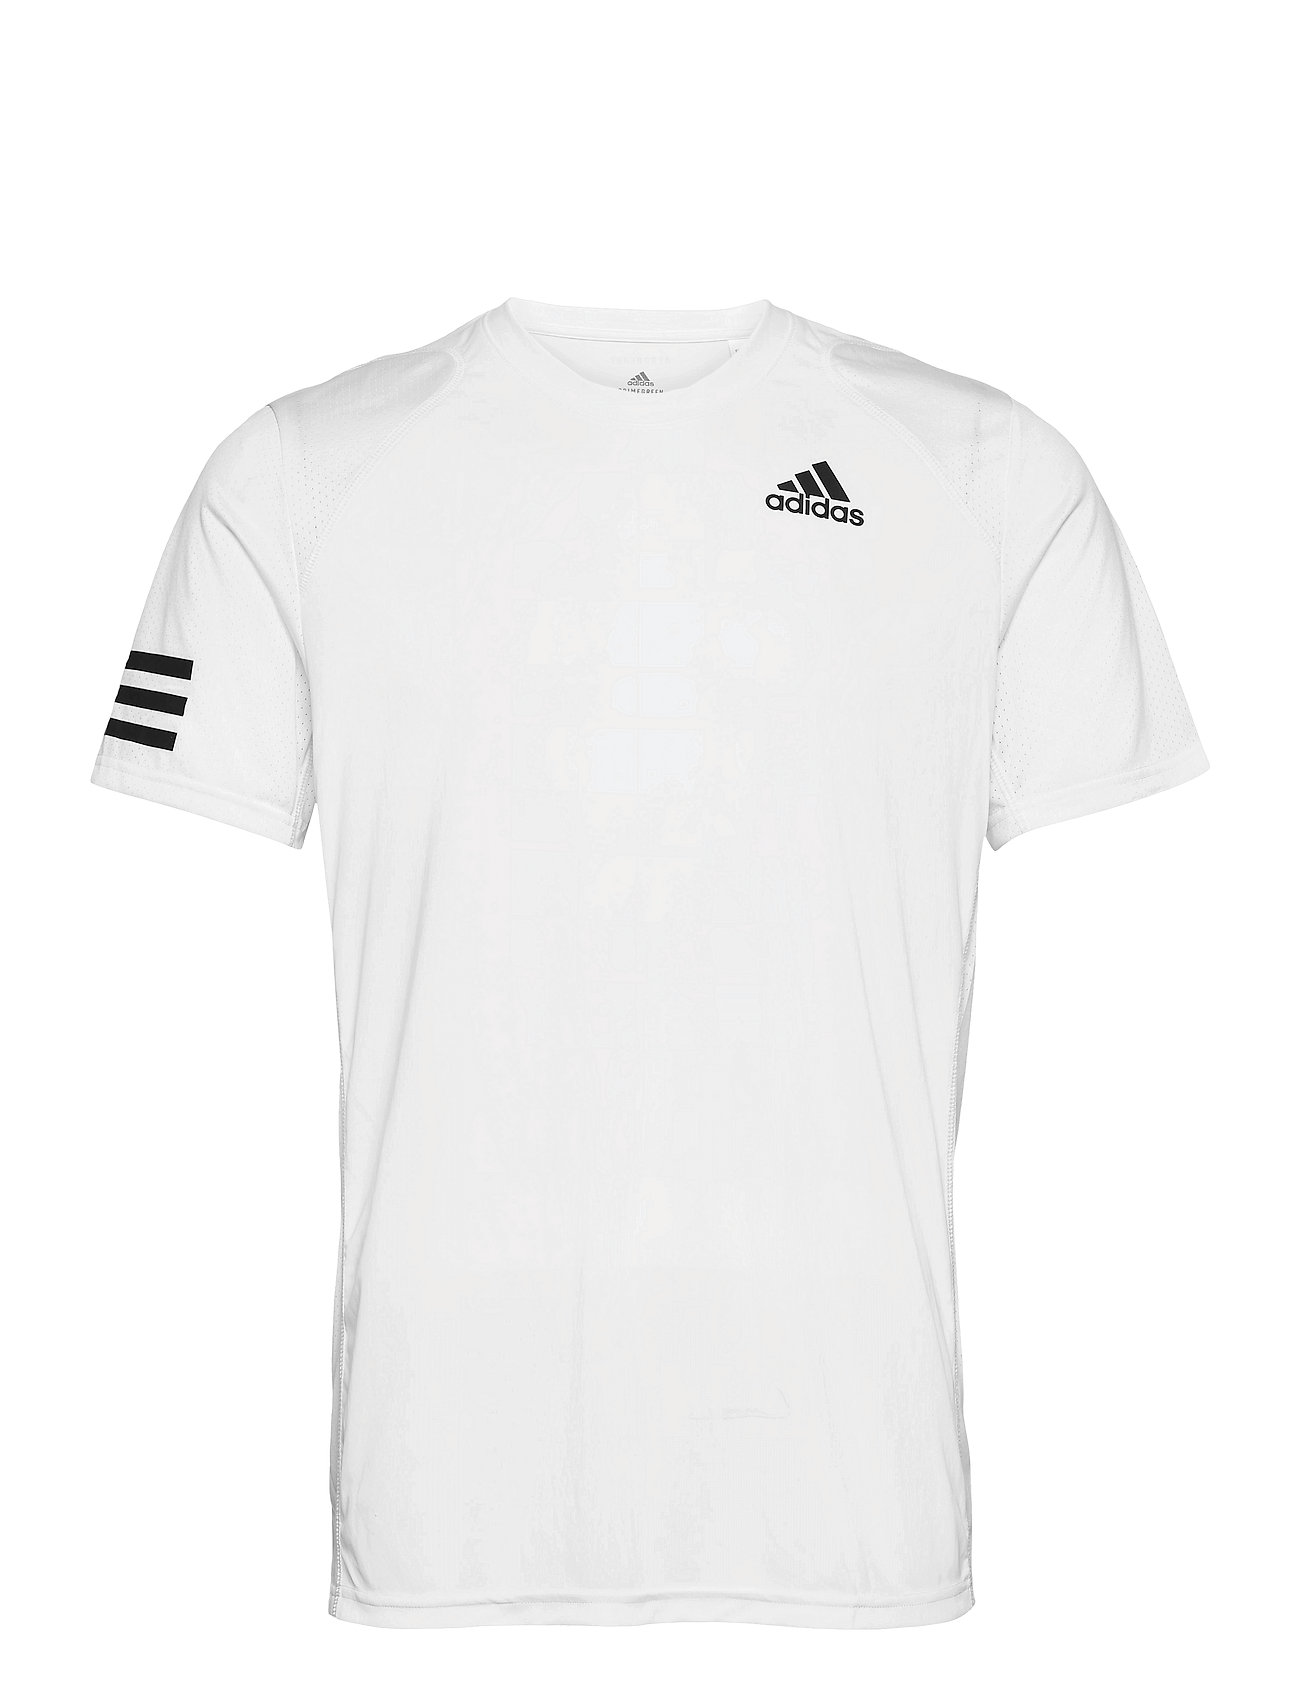 Club 3-Stripe T-Shirt T-shirts Short-sleeved Valkoinen Adidas Performance, adidas Performance